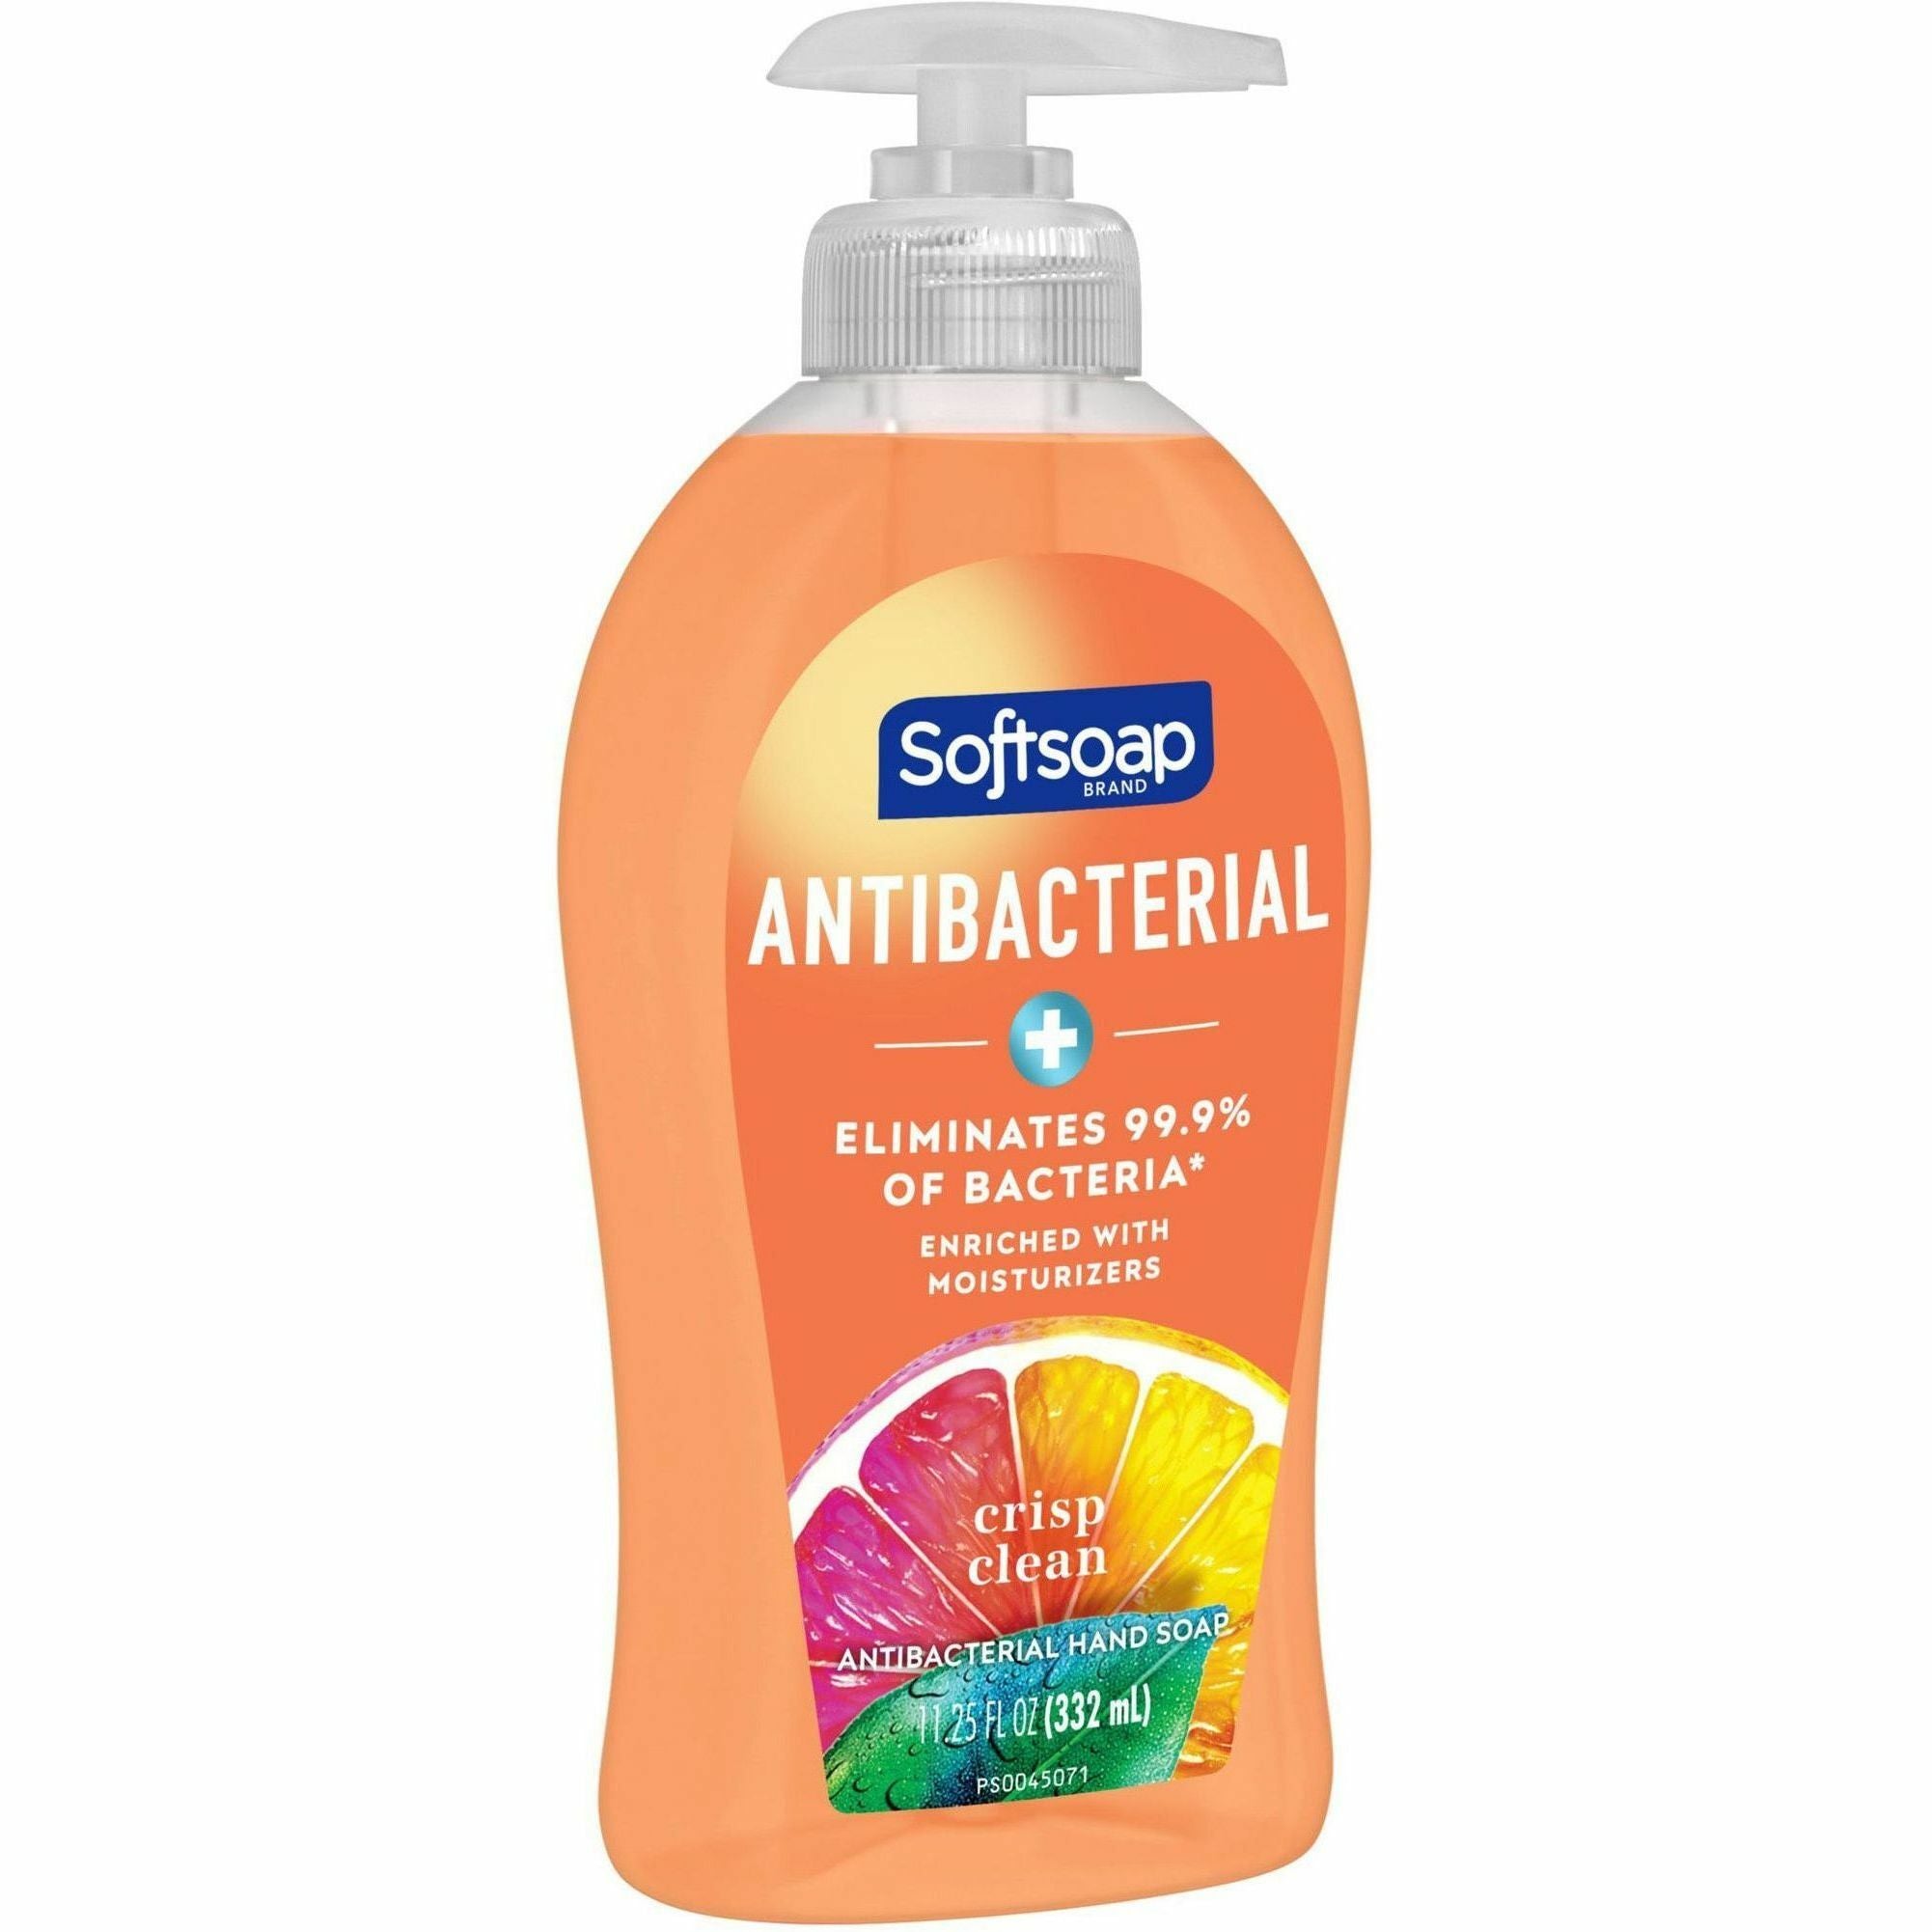 softsoap-antibacterial-soap-pump_cpcus03562act - 6